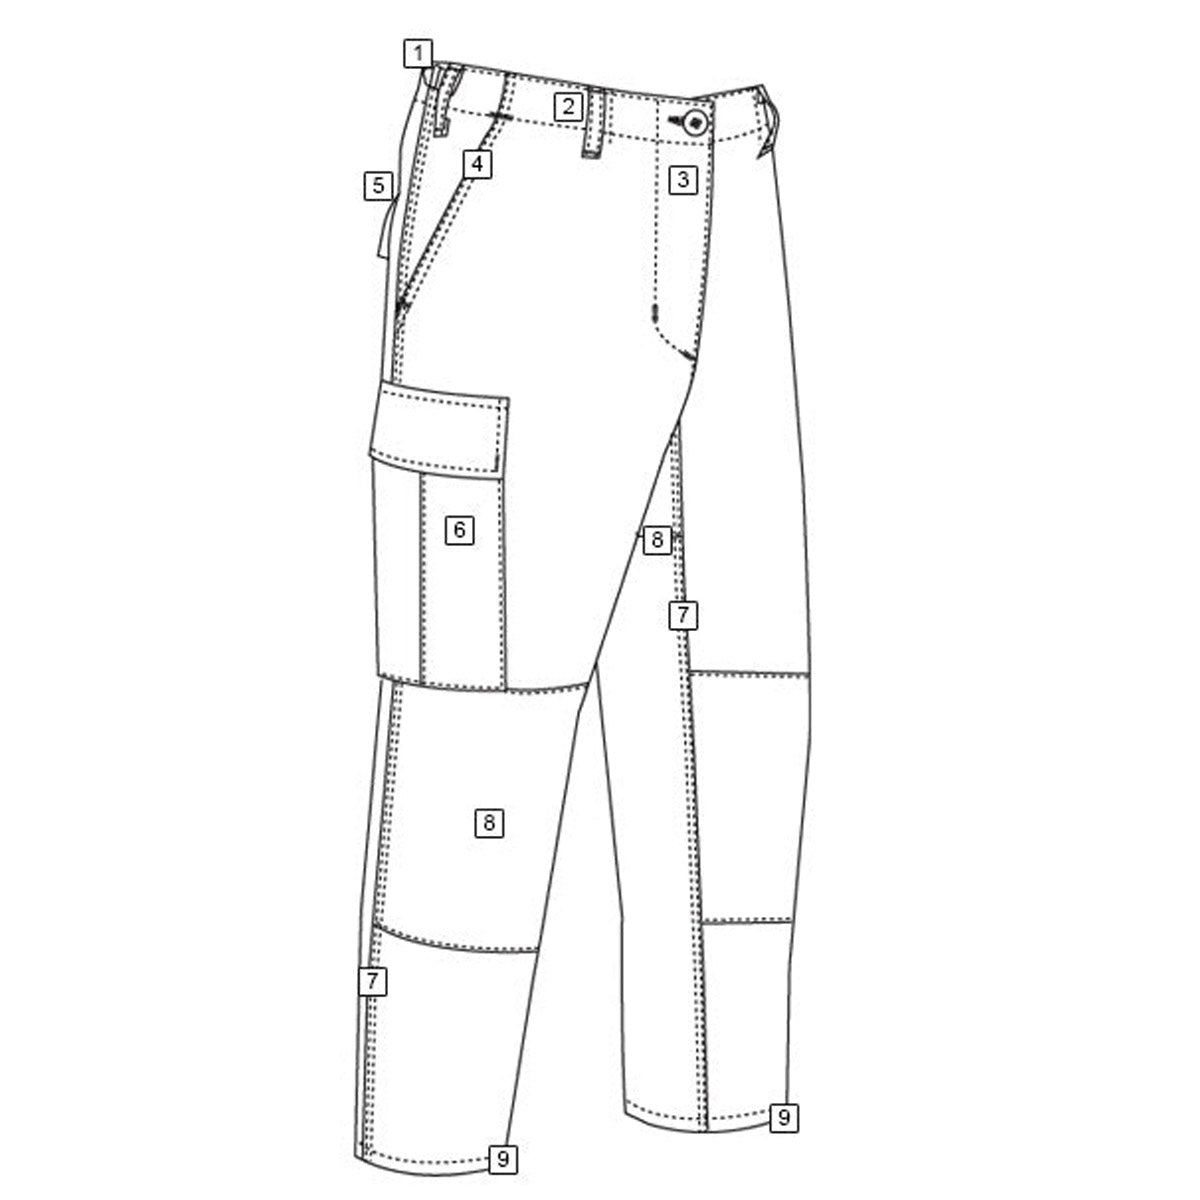 Tru-Spec BDU Pants (Poly/Cotton)-Tac Essentials